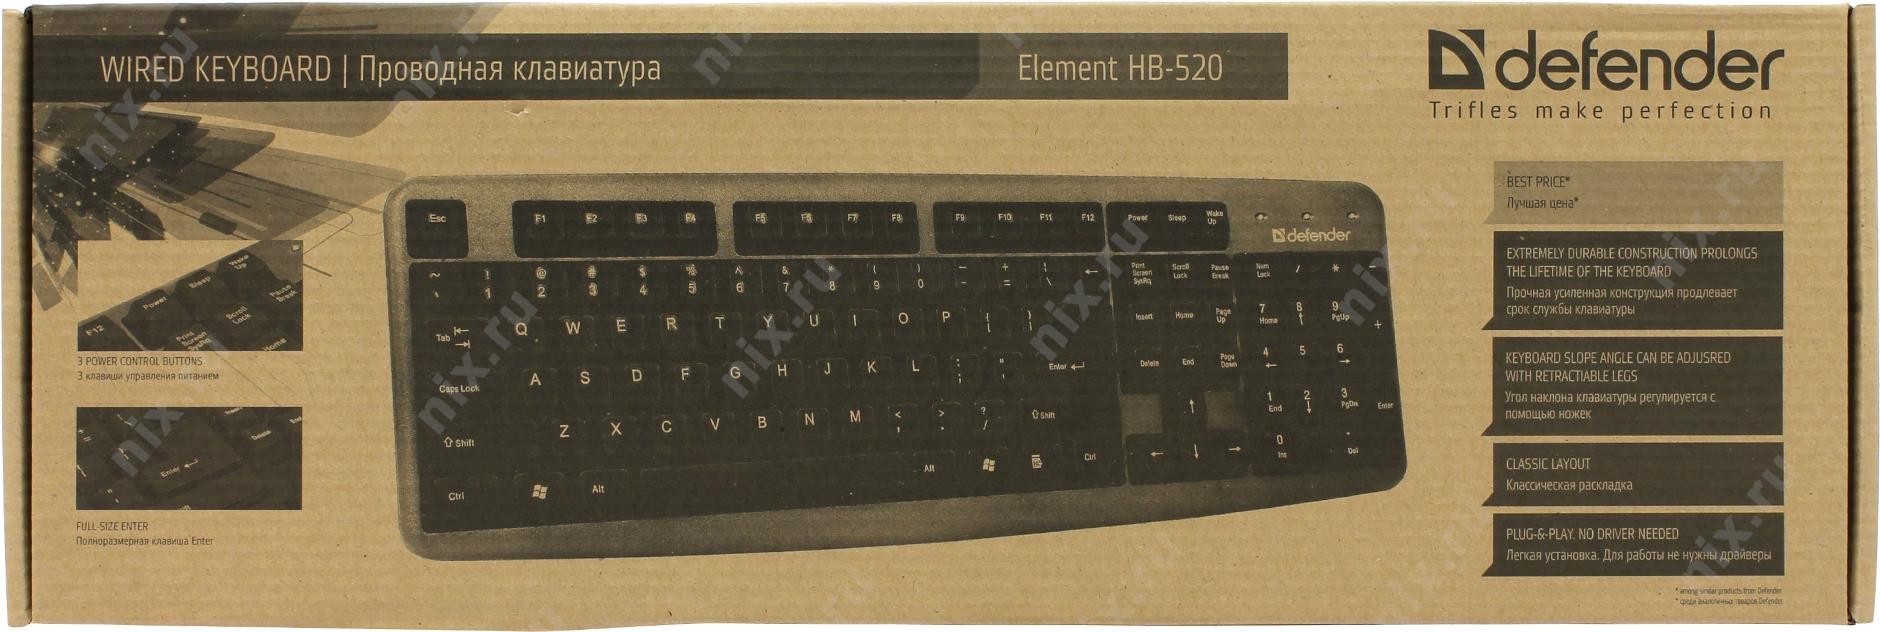 Element 520. Defender клавиатура element HB-520-B. Клавиатура Defender element hd520. Defender wired Keyboard (element HB-520). Defender element HB-520 USB 2.0.